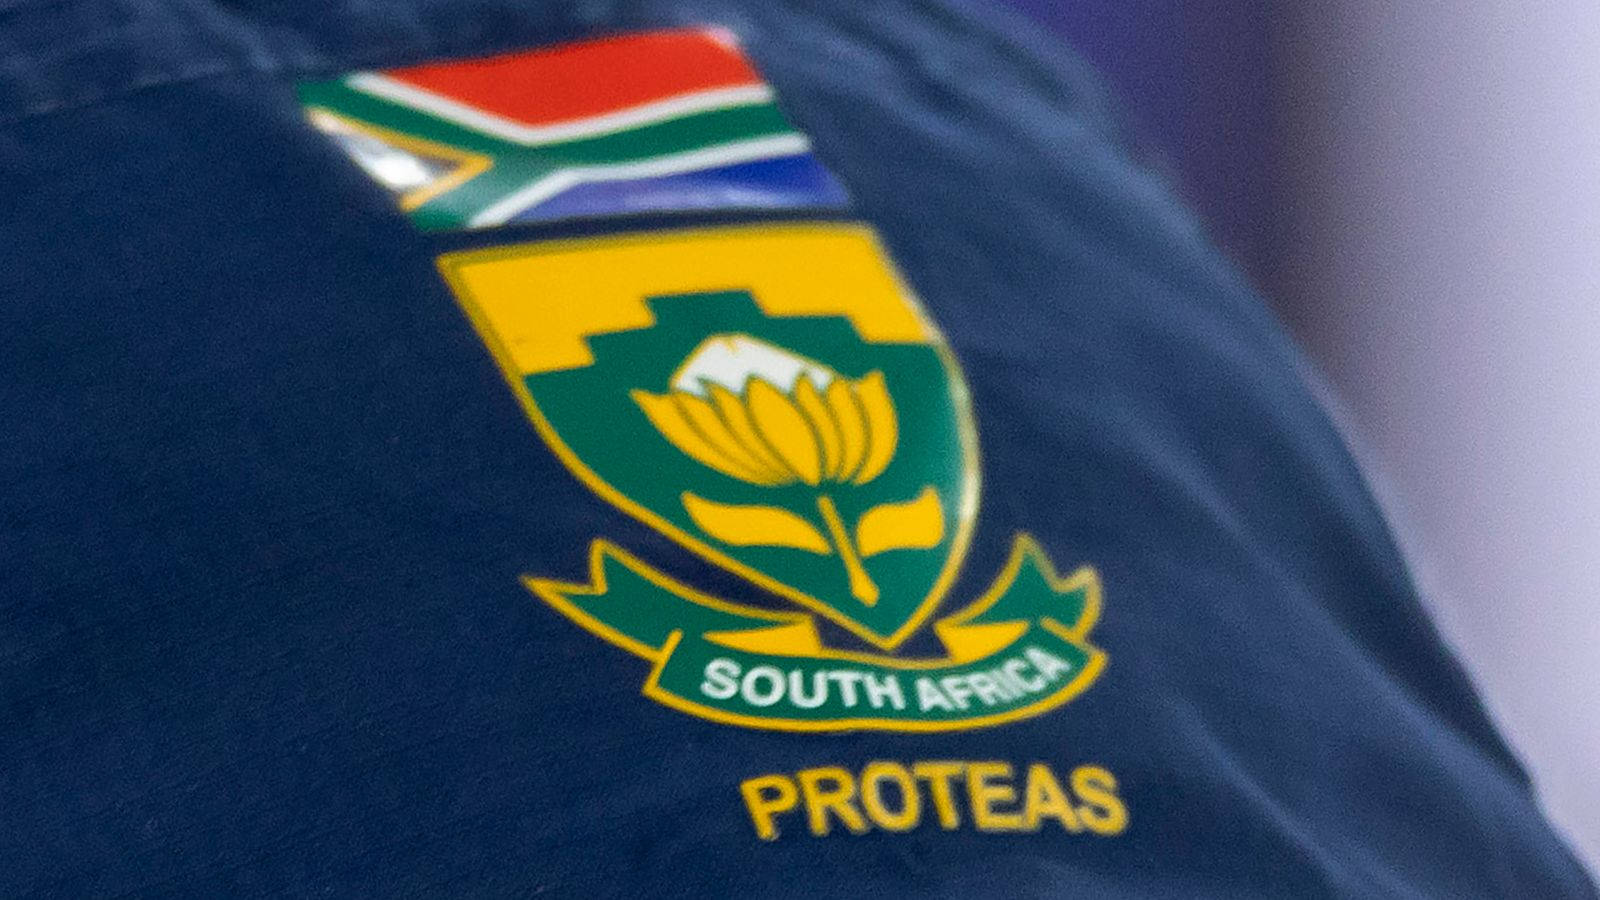 South Africa Cricket Logo In Shirt Wallpaper